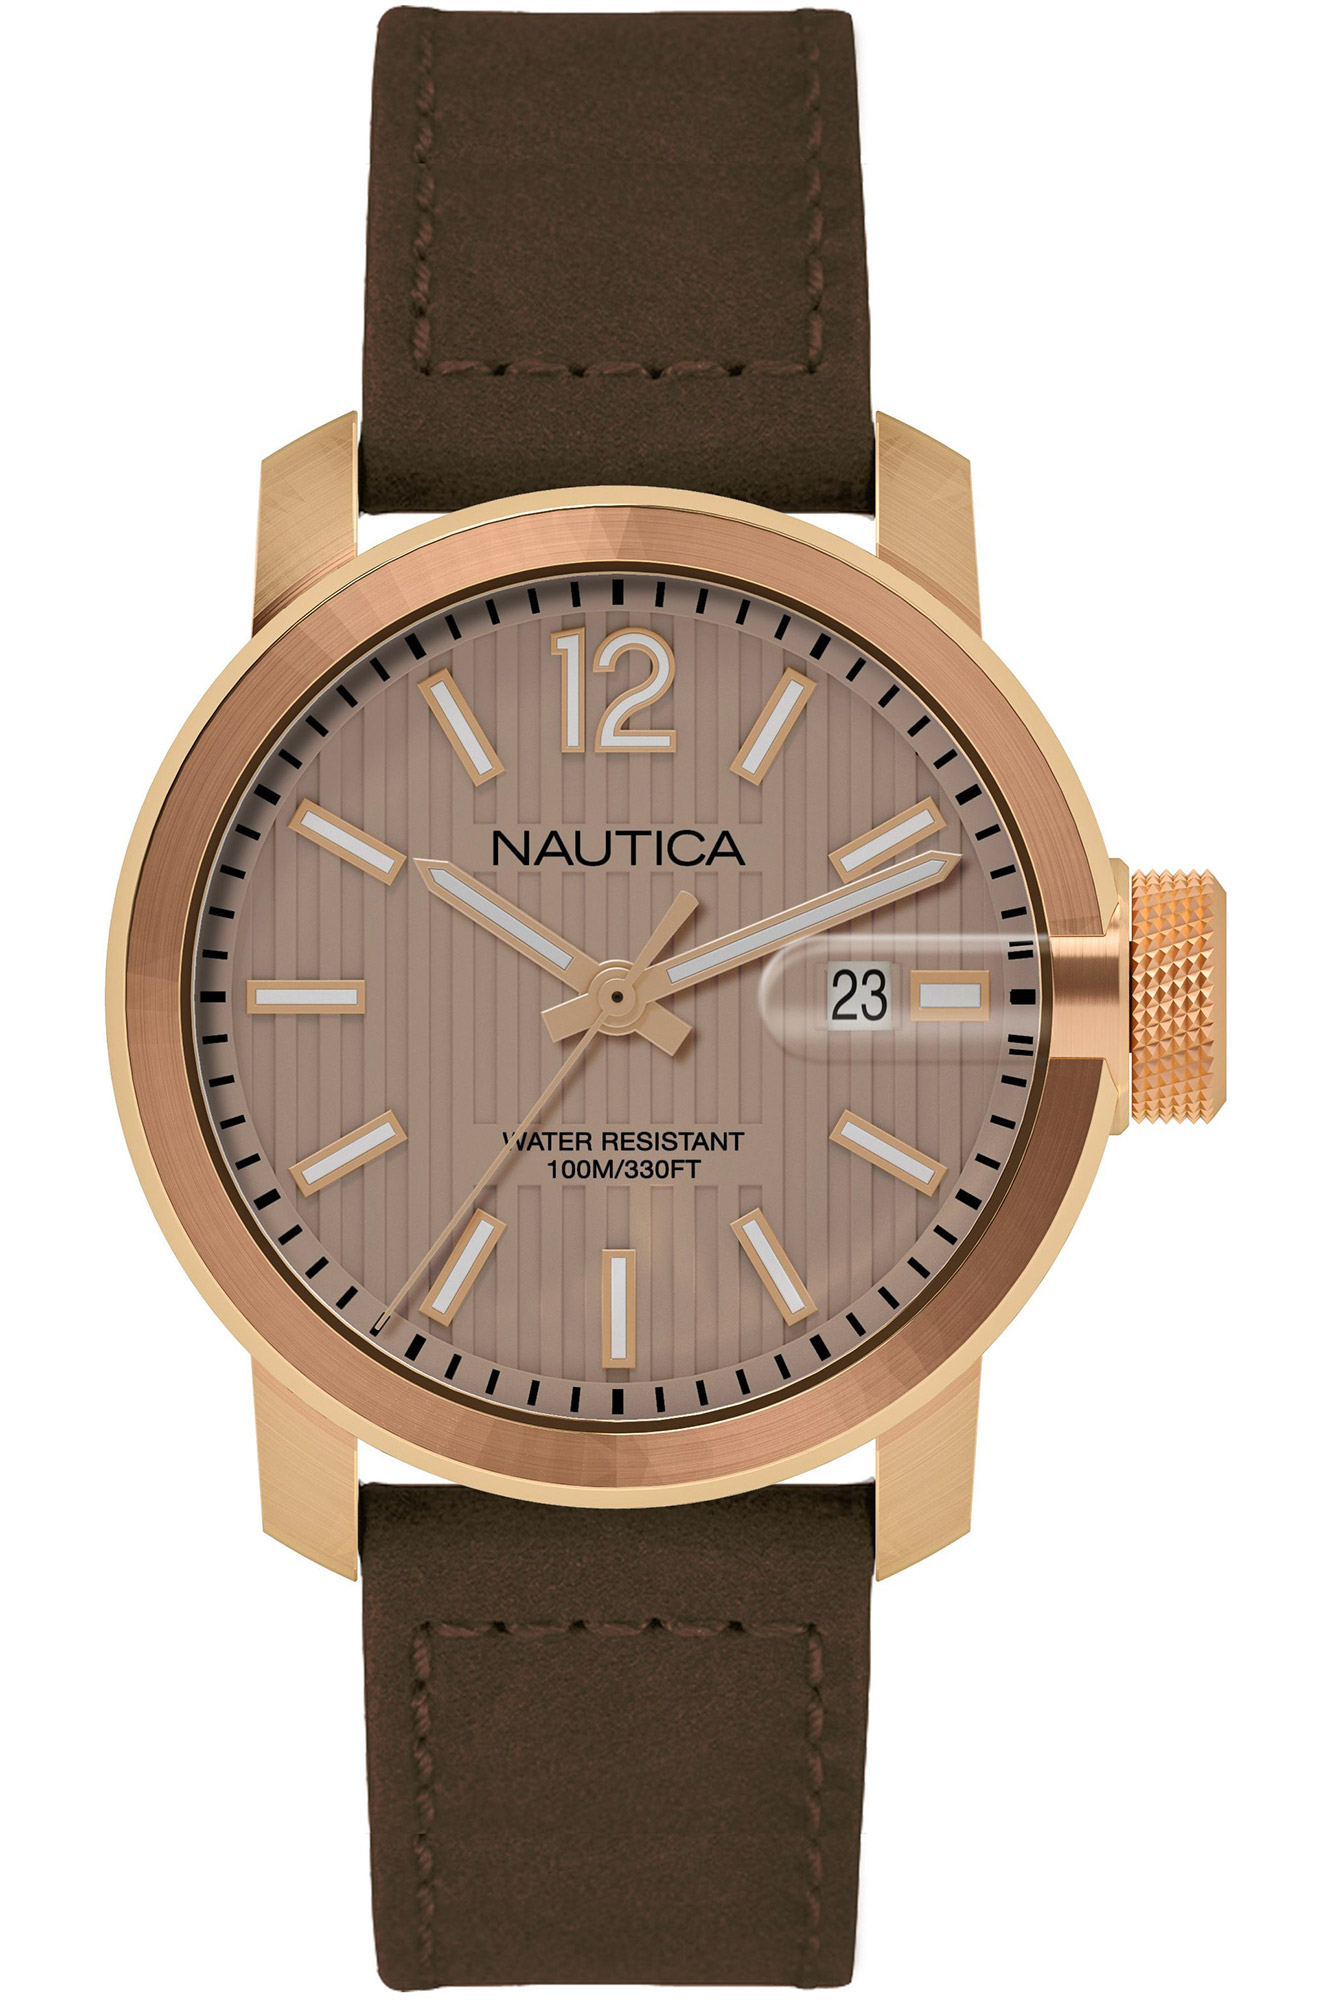 Watch Nautica napsyd005